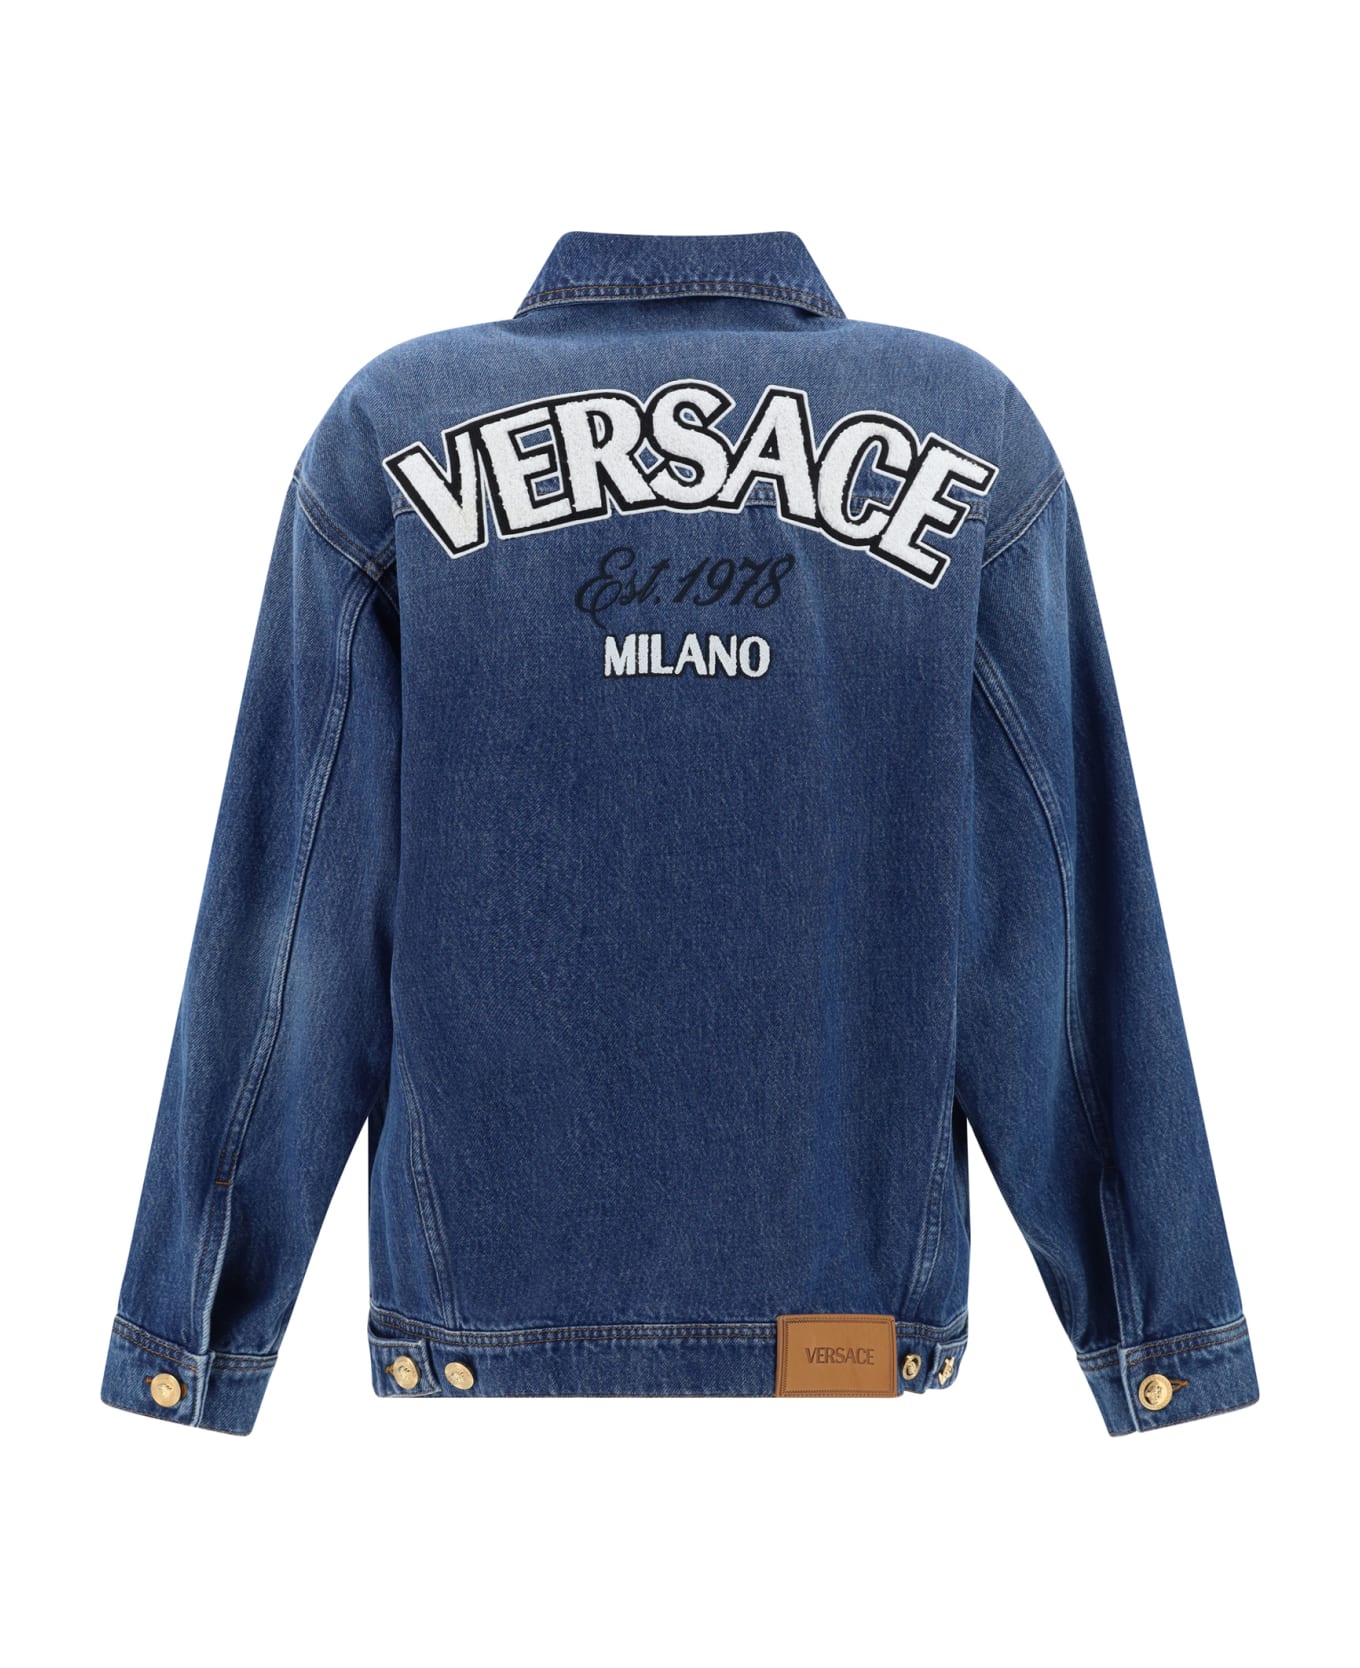 Versace Denim Jacket - Medium Blue